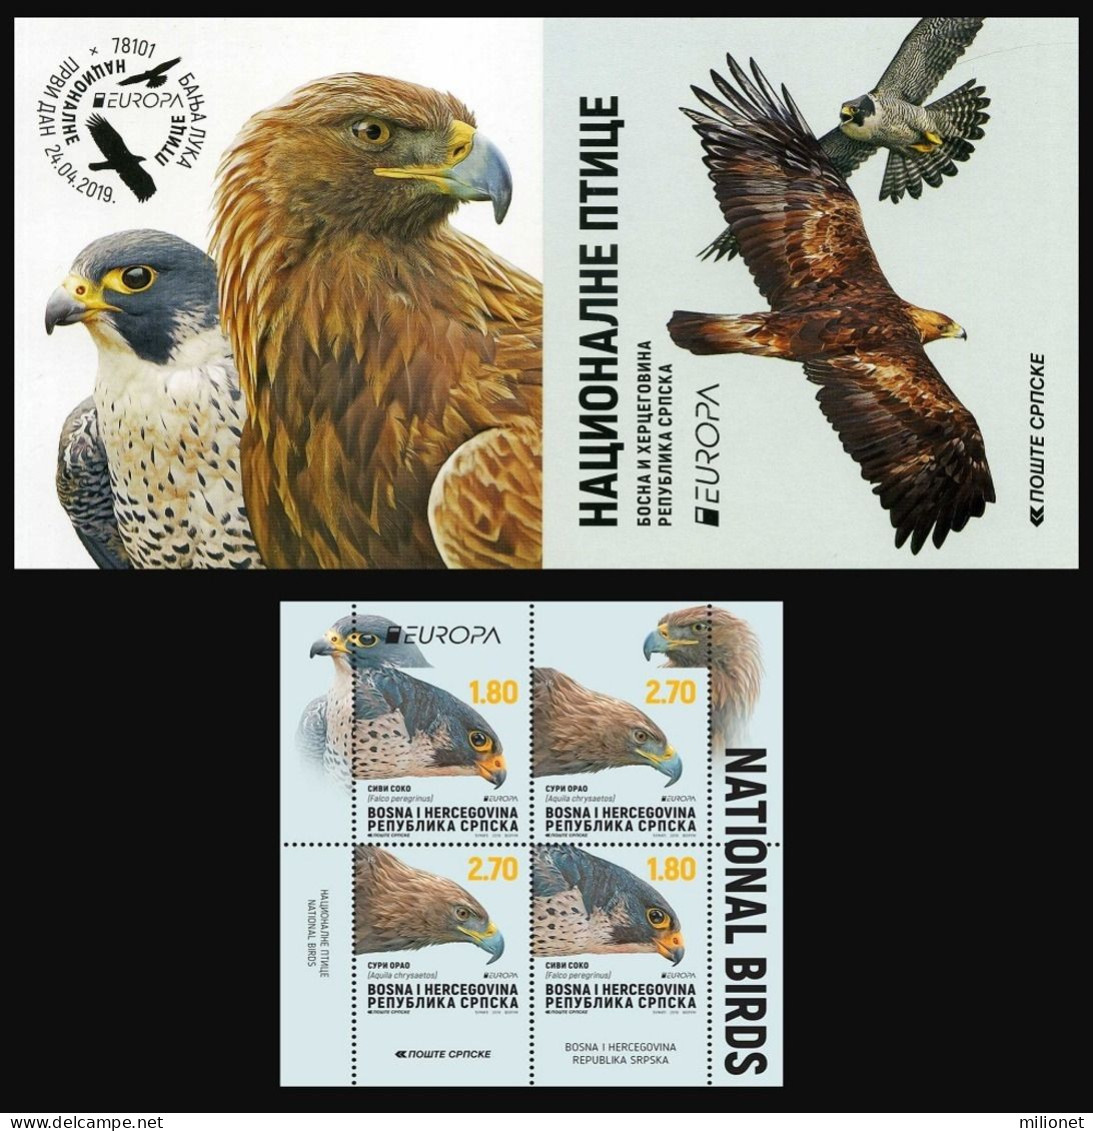 SALE!!! BOSNIA HERZEGOVINA SERBIA SERB POST PALE BOSNIE BOSNIEN 2019 EUROPA CEPT National Birds Booklet MNH ** - 2019